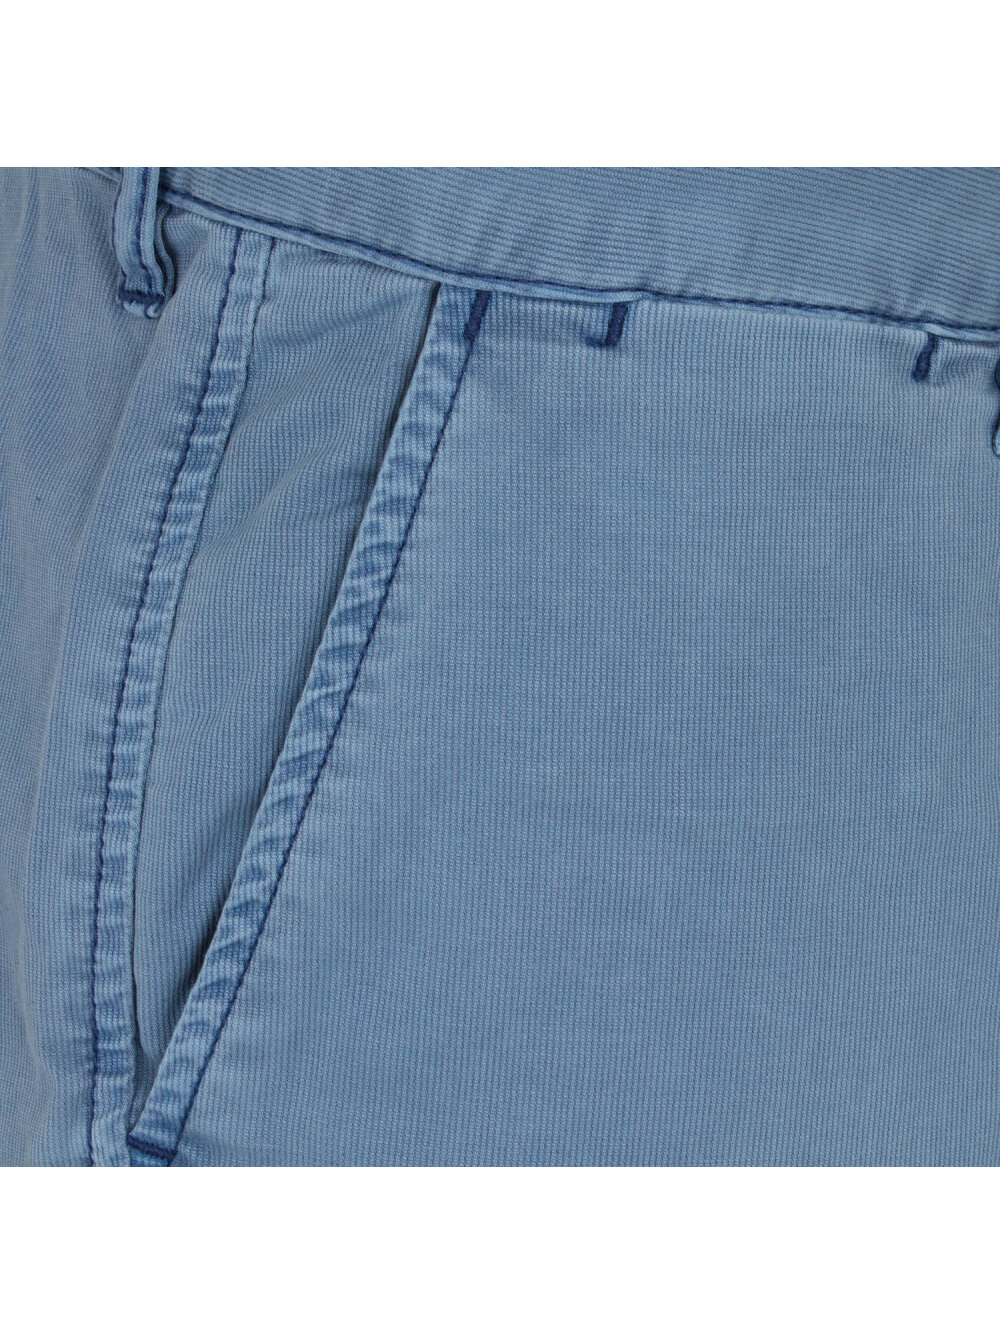 Armani Jeans -  Shorts